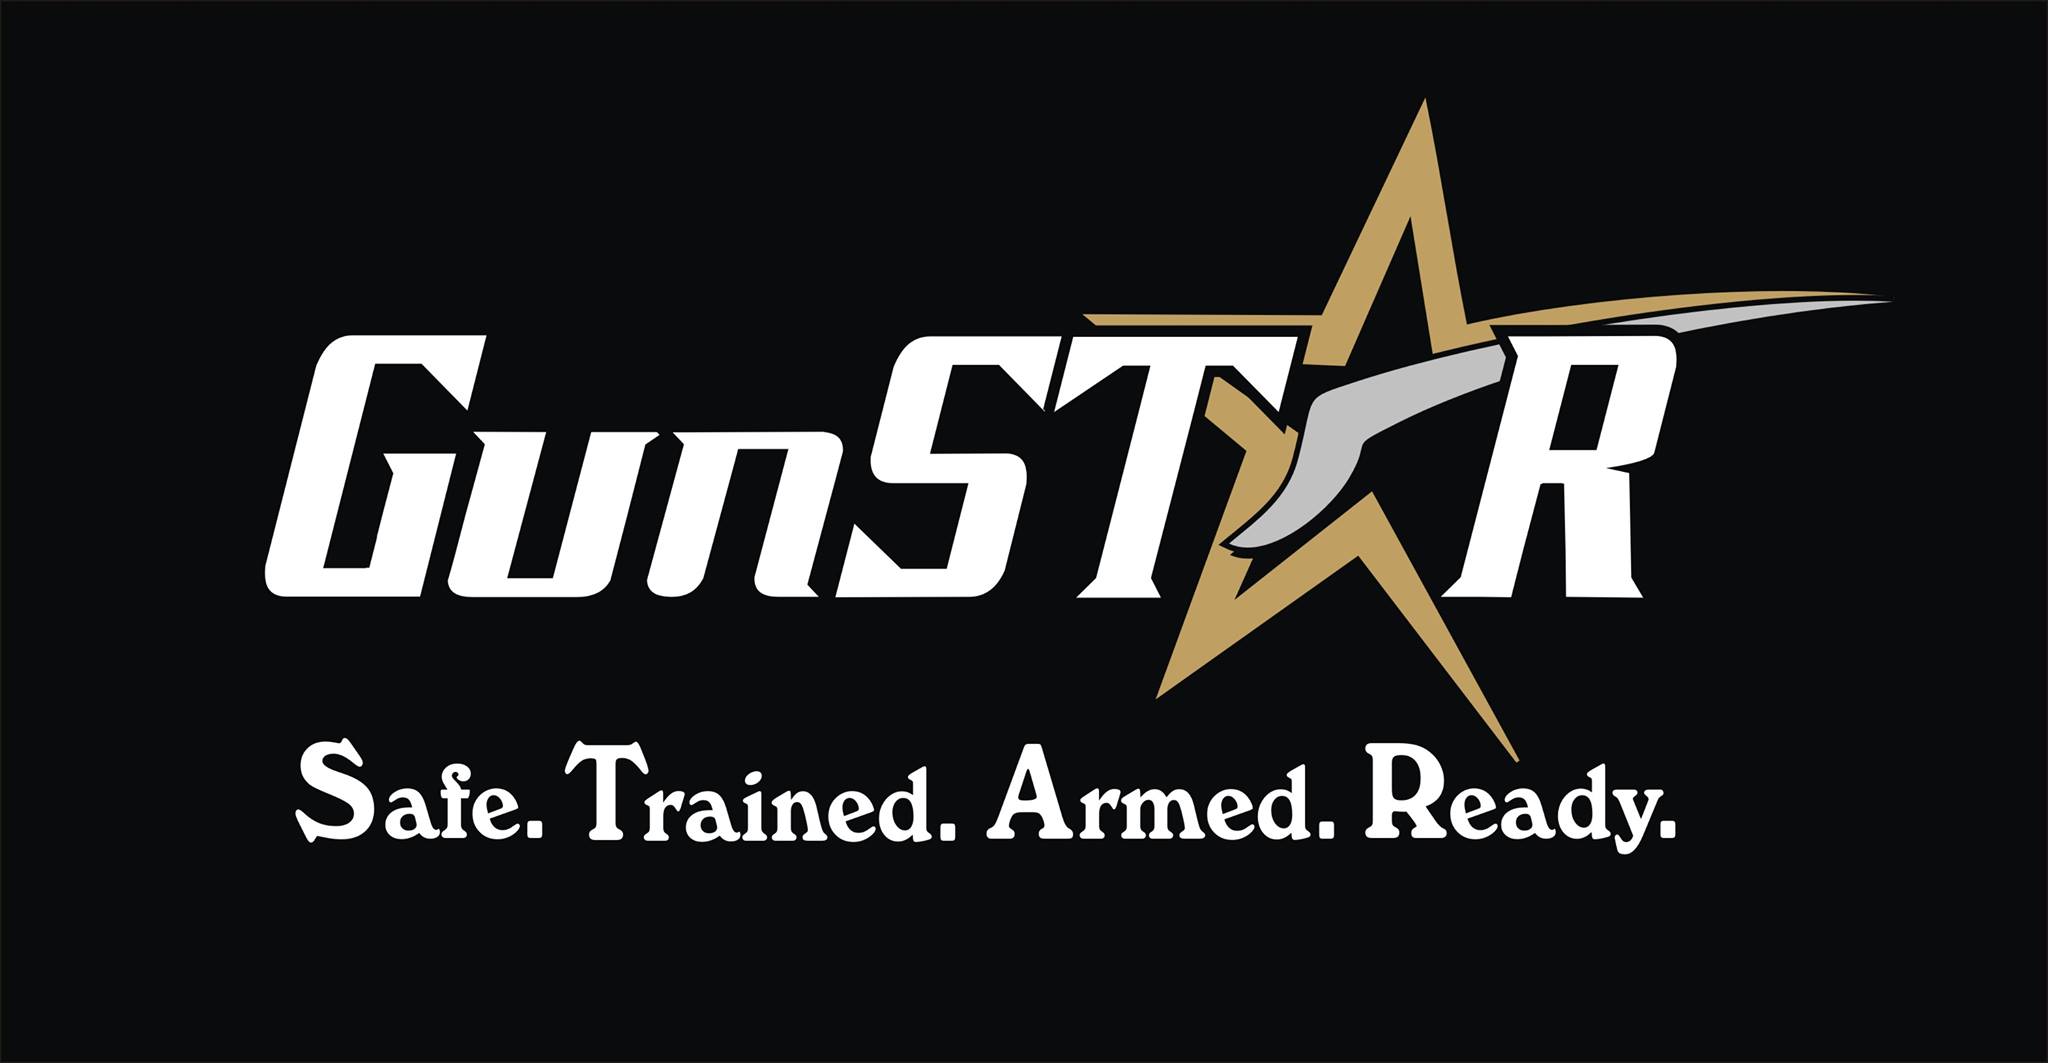 Gun Star Training